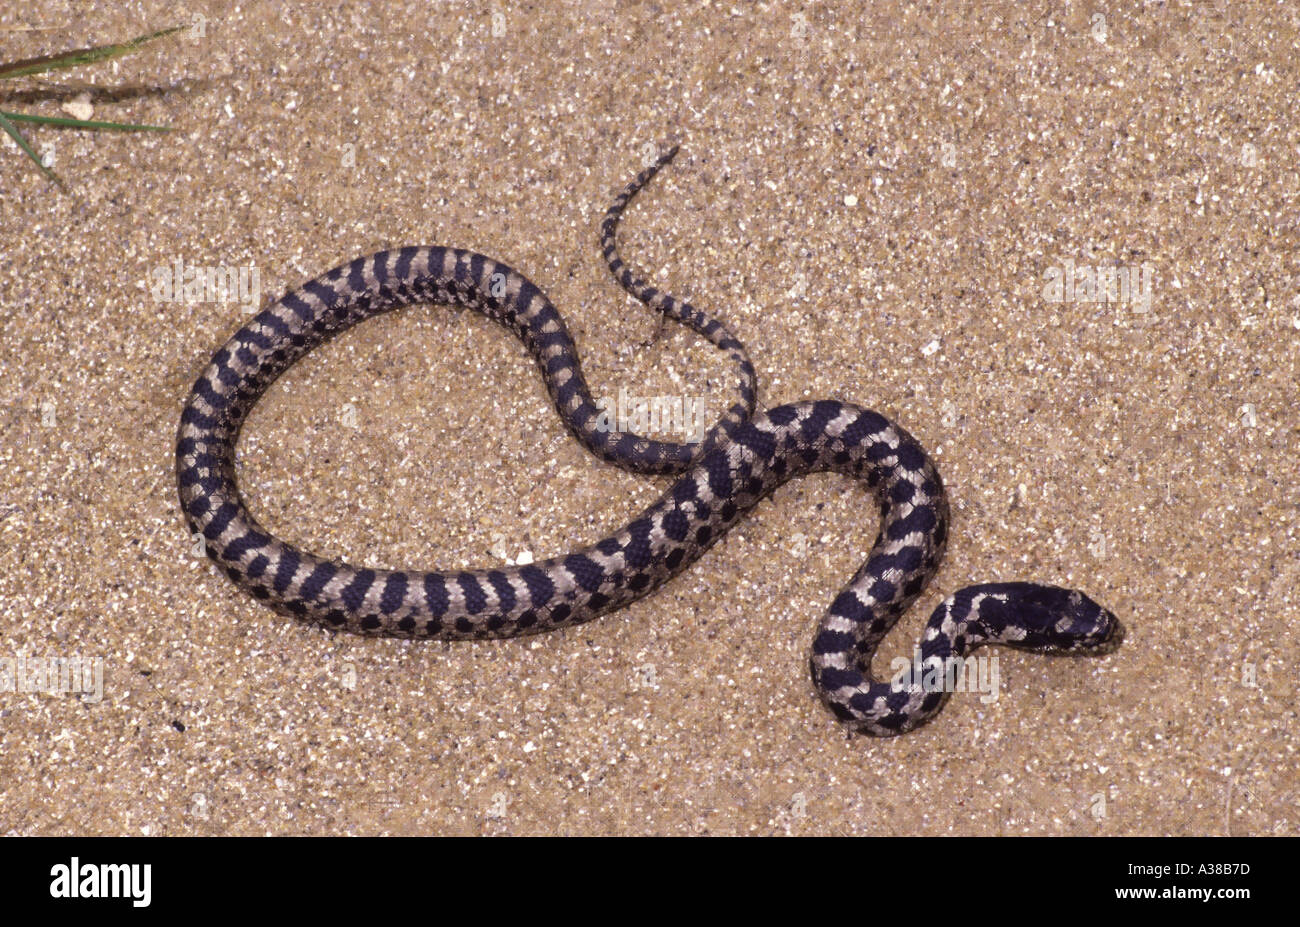 Four lined Snake Juvenile Spain elaphe quatuorlineata Stock Photo